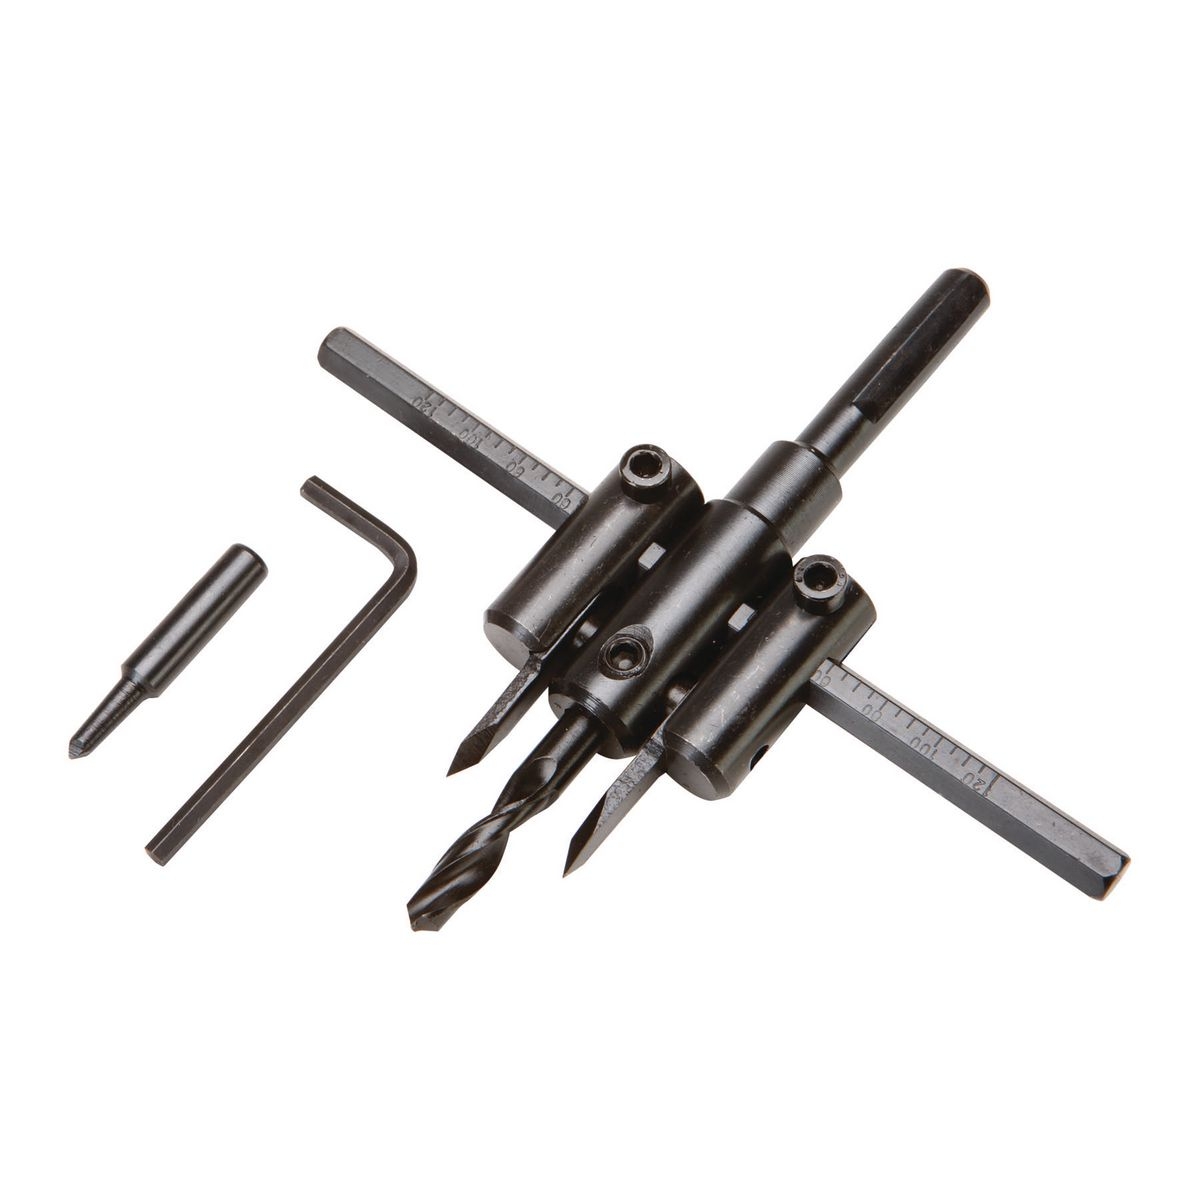 WARRIOR Carbide Tip Adjustable Circle Cutter - Item 68117 / 37370 / 69063